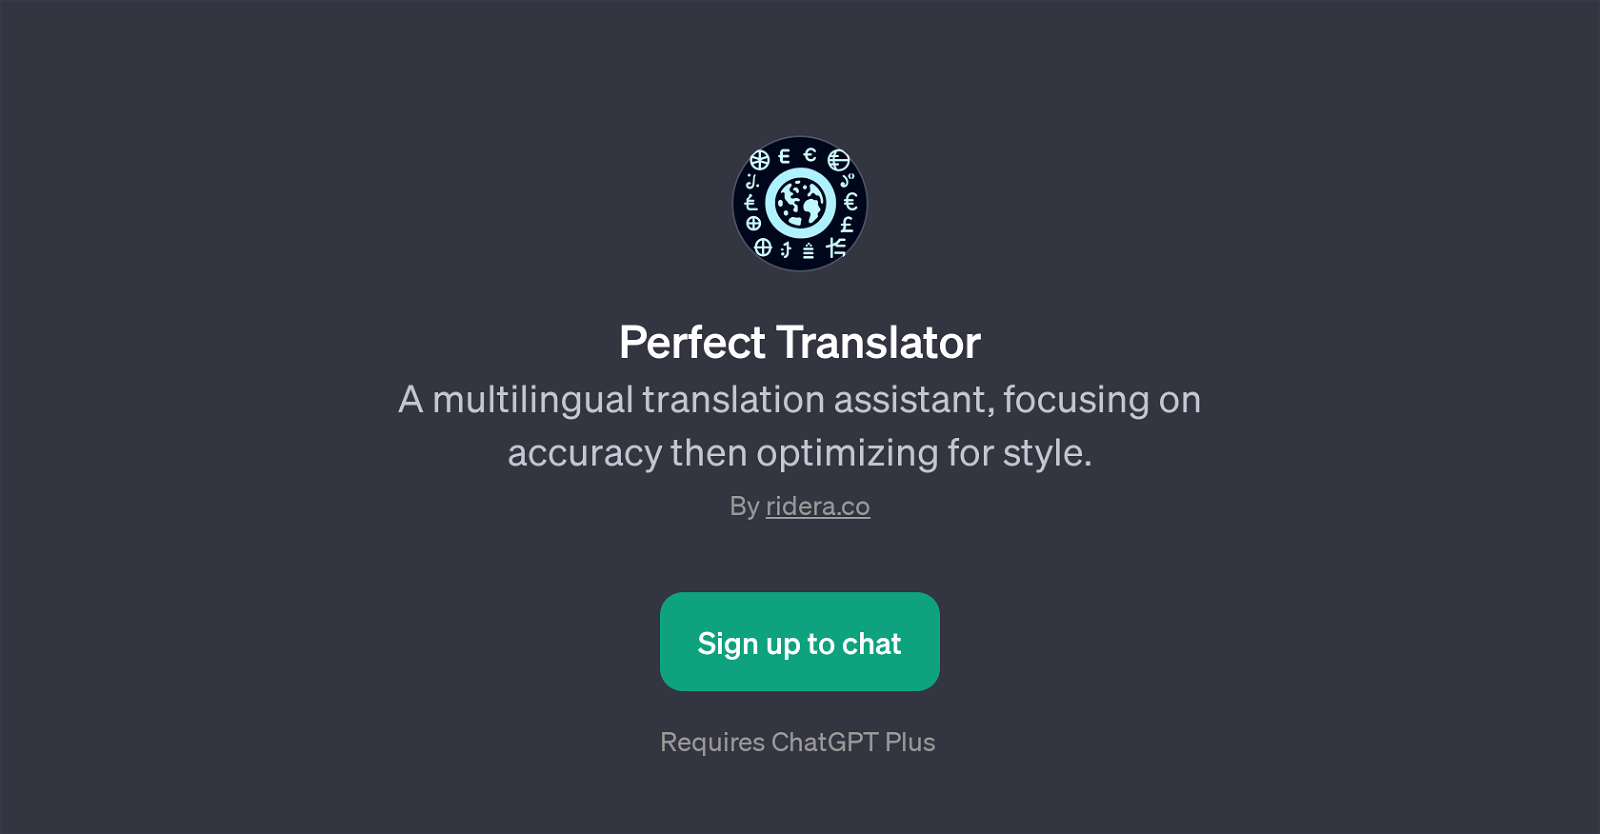 Perfect Translator website